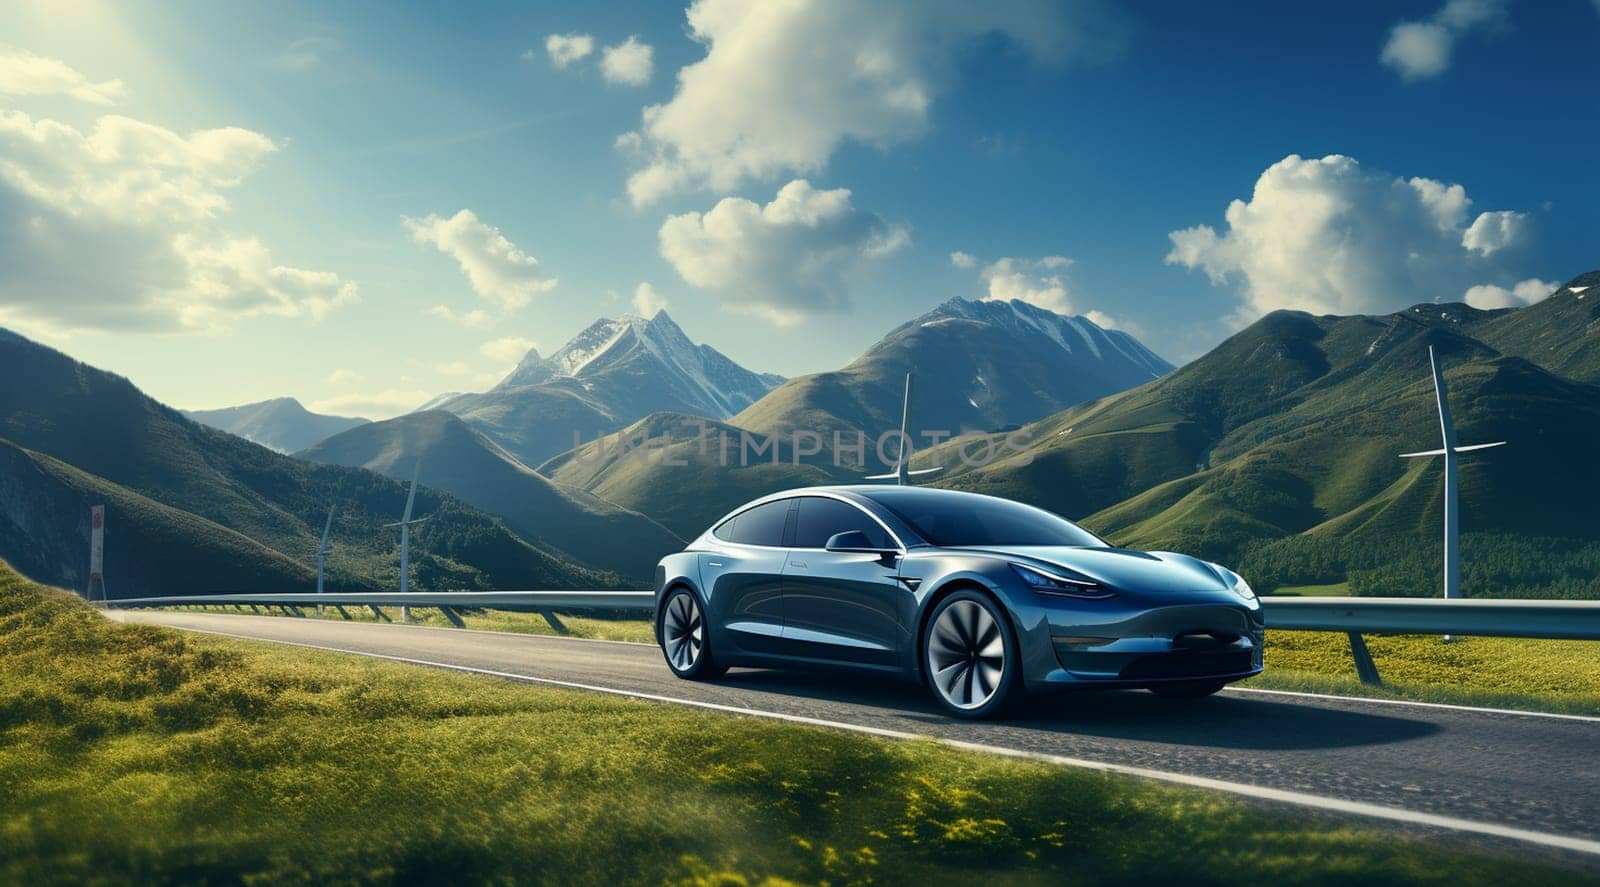 Car concept dark transport elegant design, close view. 3D rendering. High quality photo